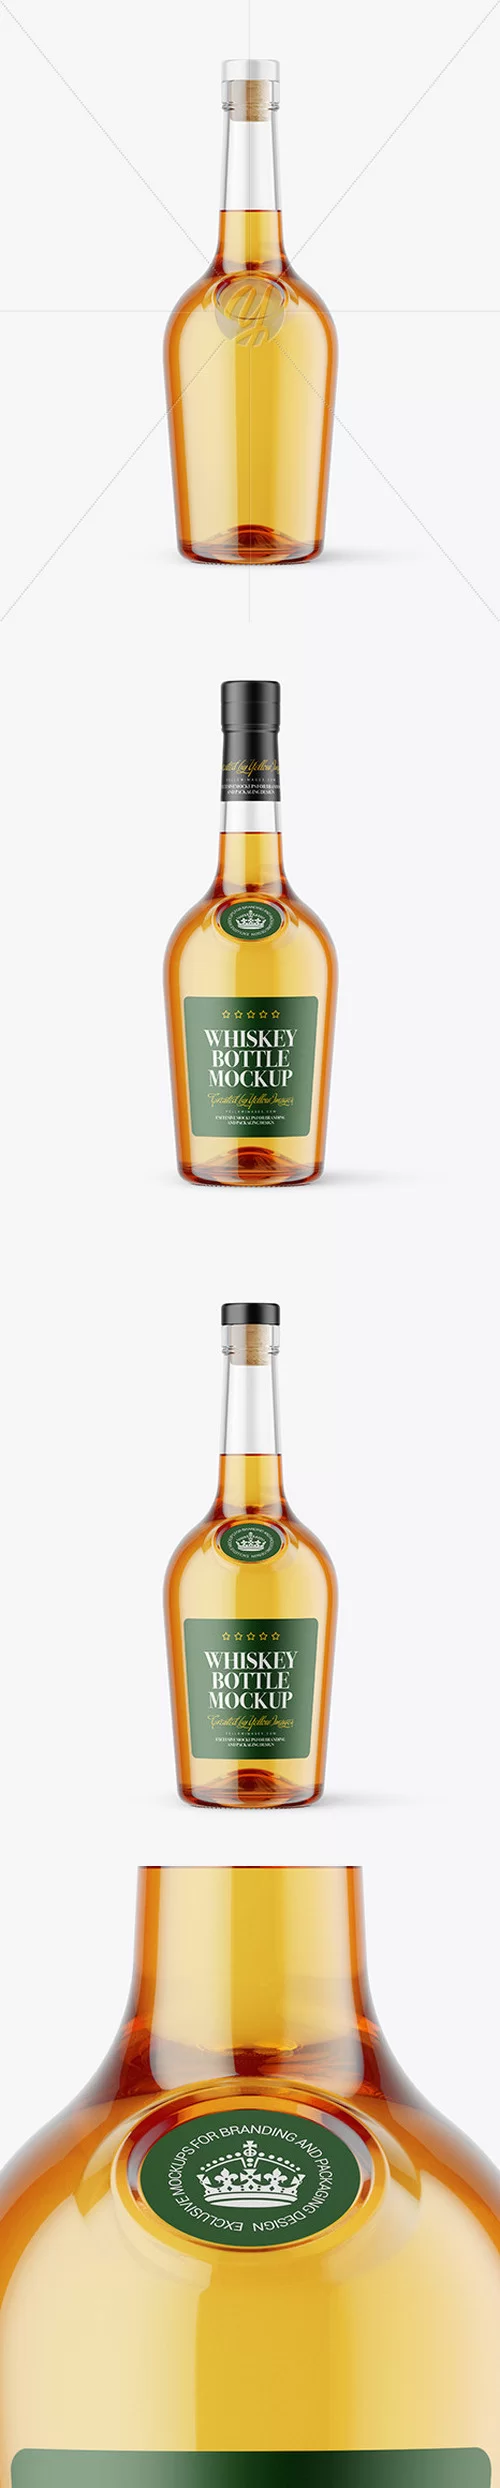 500ml Clear Glass Whiskey Bottle Mockup 47345